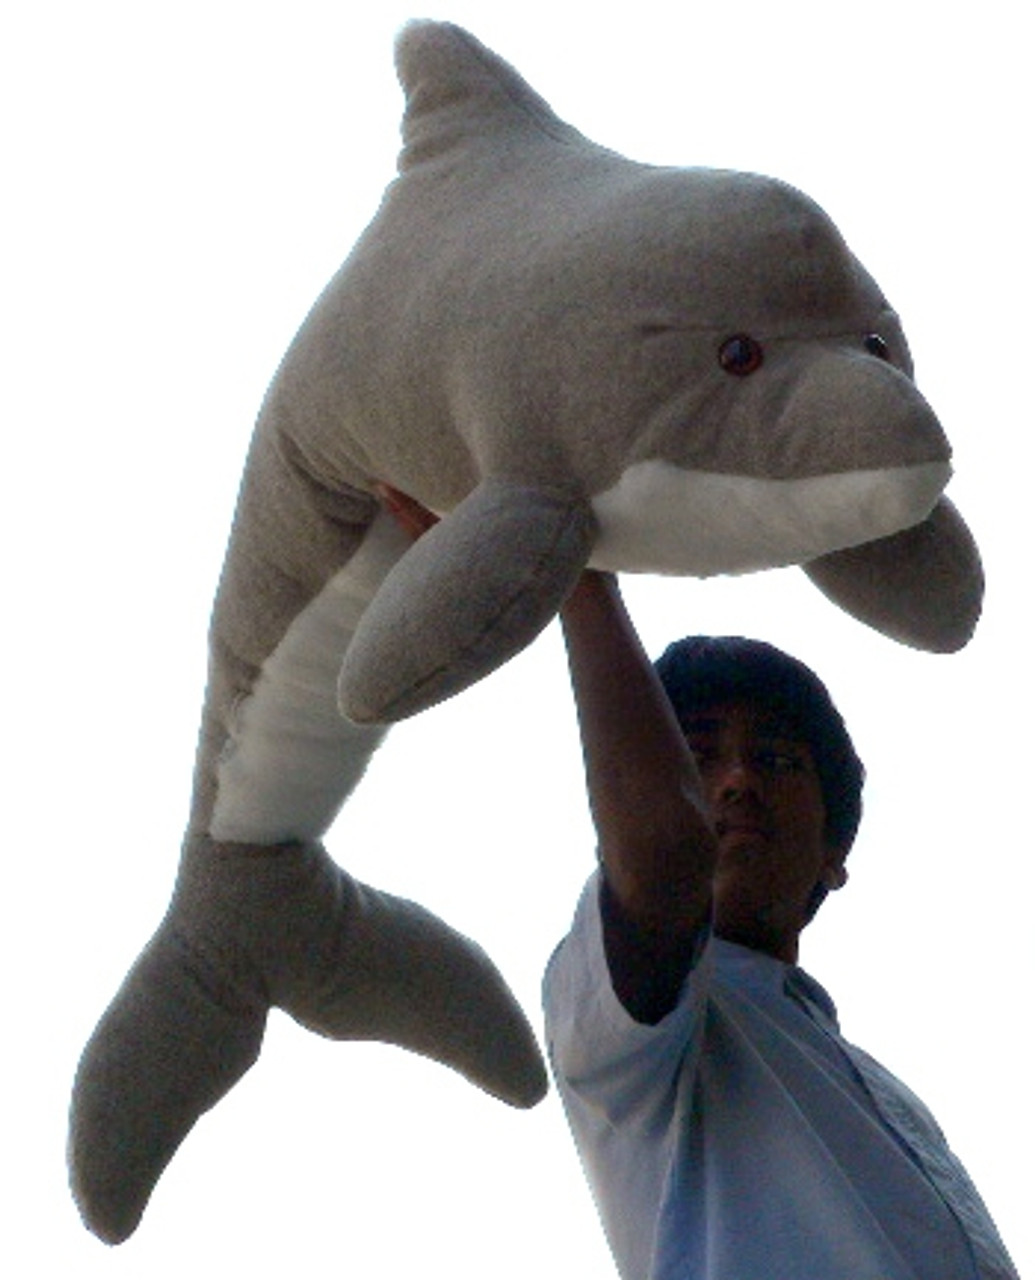 giant stuffed fish toy